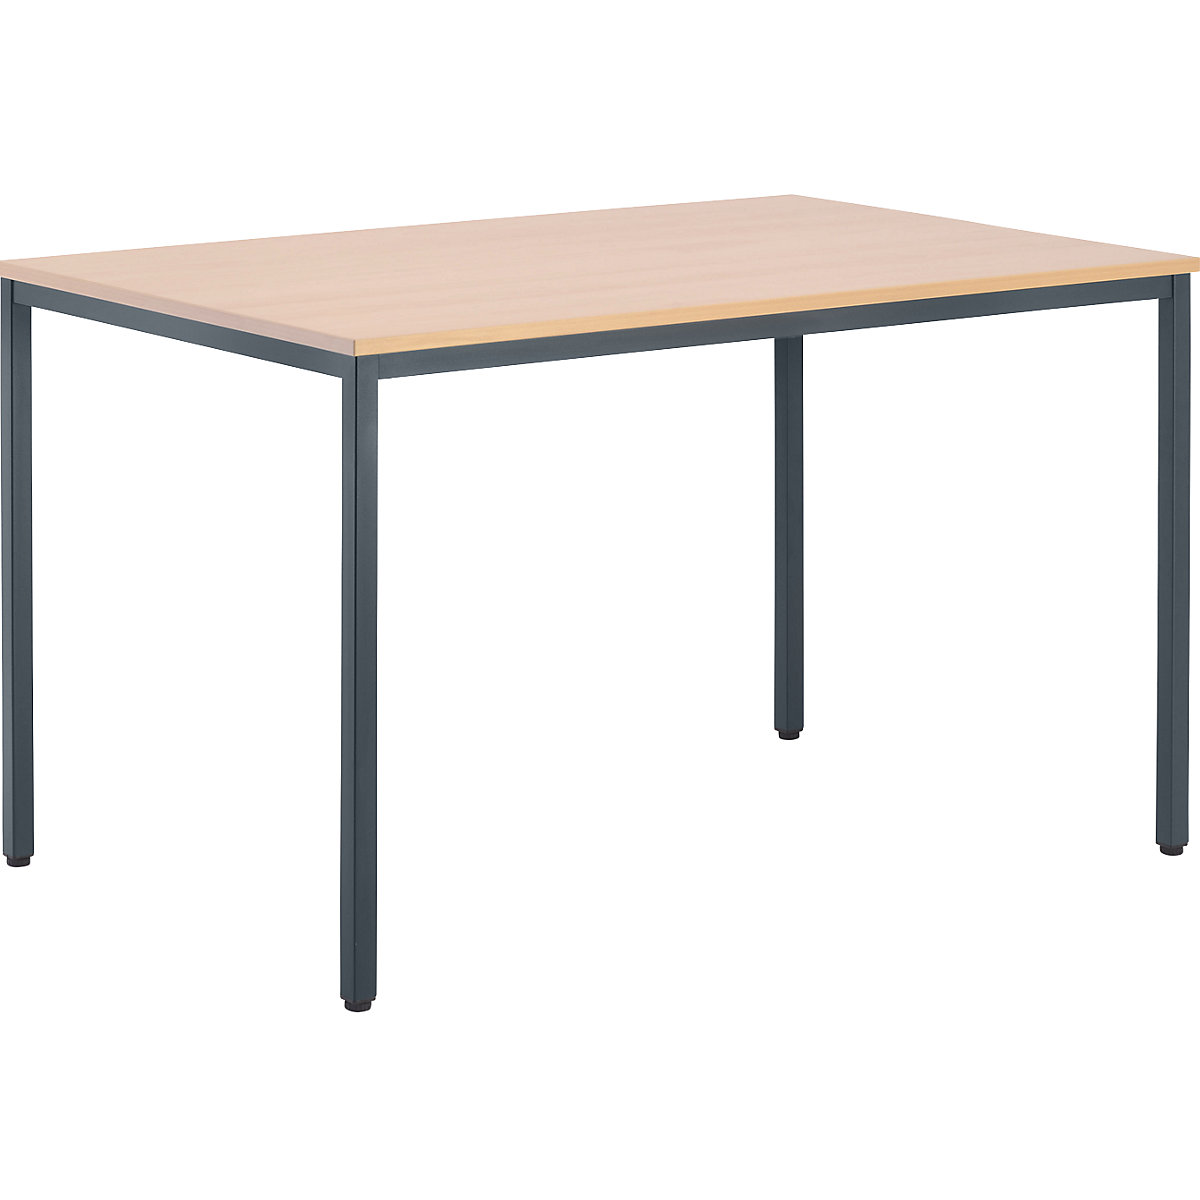 Multi-purpose table – eurokraft basic, HxWxD 720 x 1200 x 800 mm, top in beech finish, basalt grey frame-6